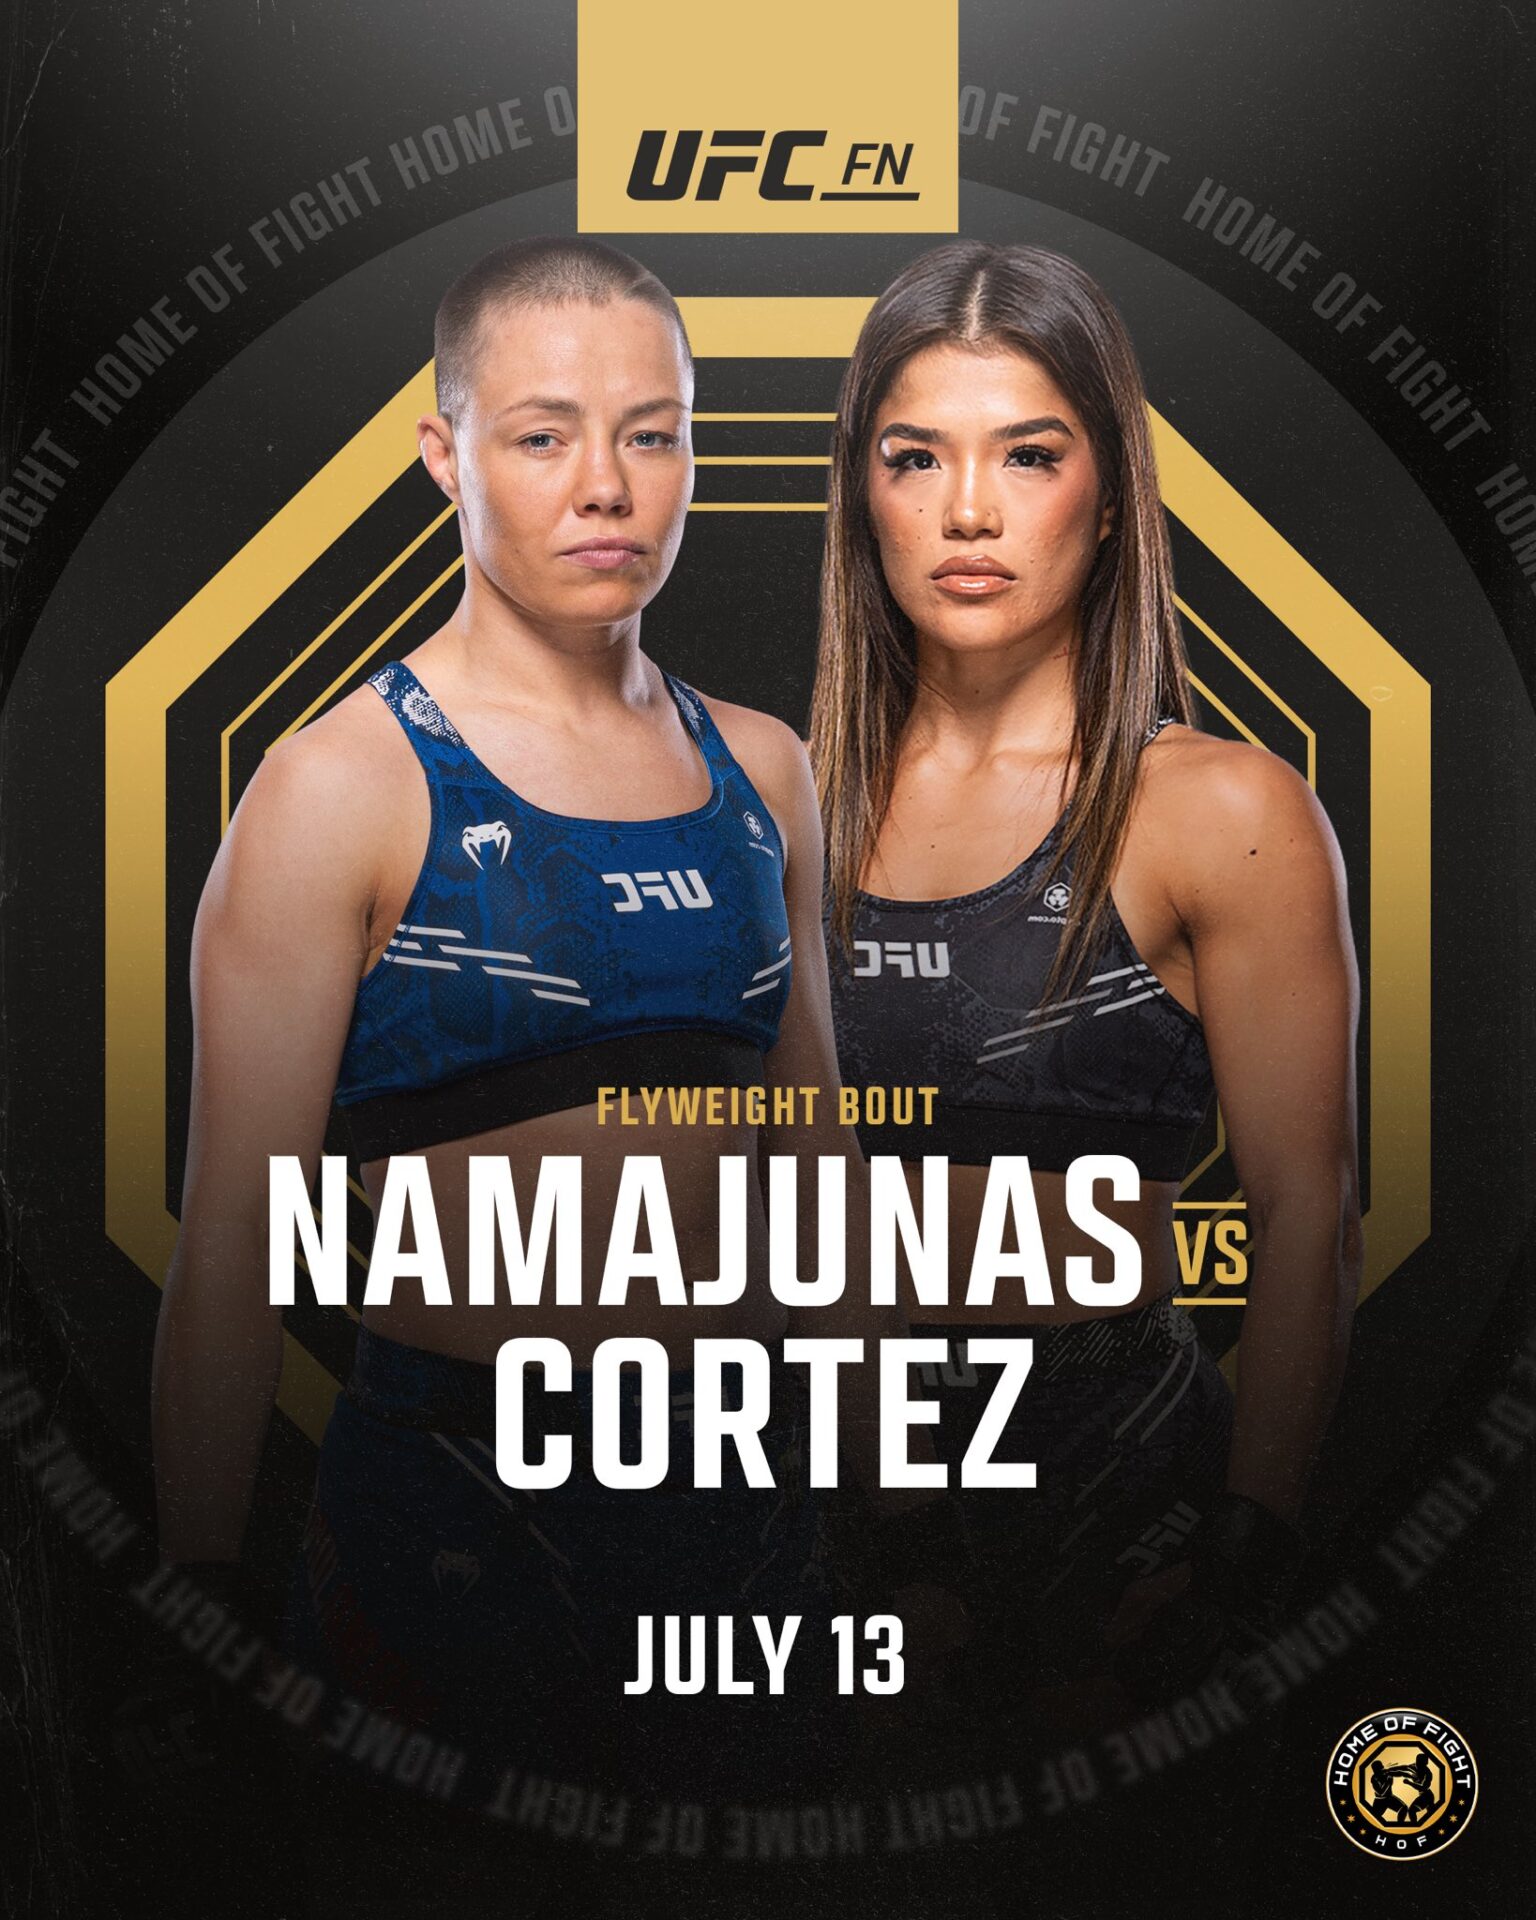 UFC Fight Night - Namajunas vs Cortez